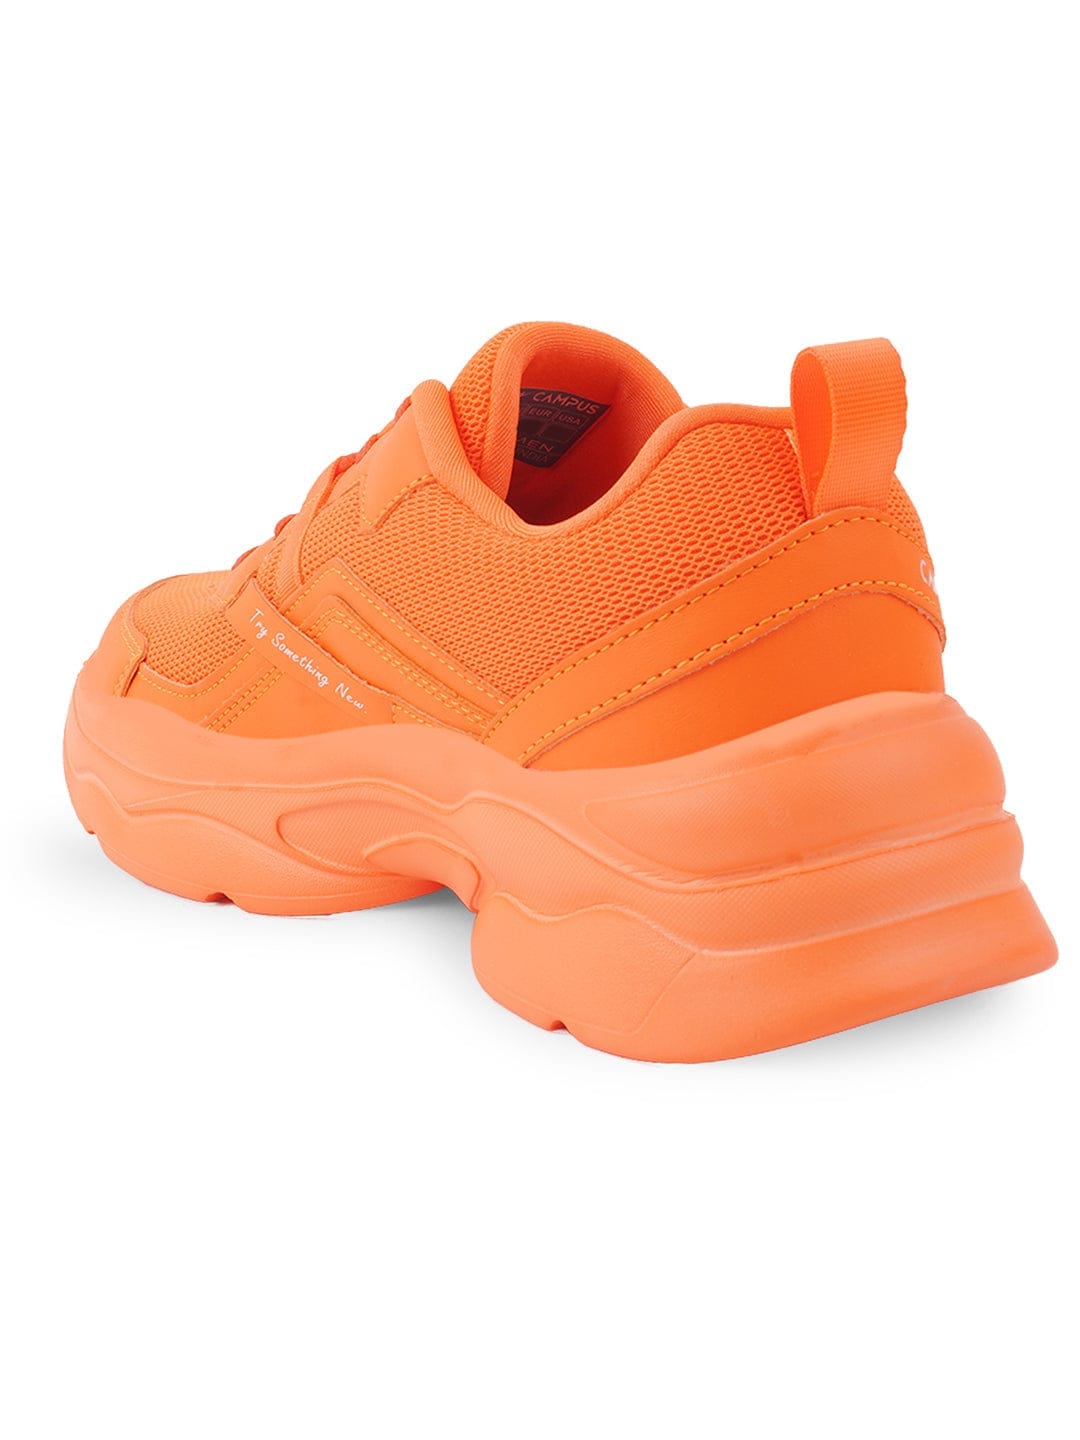 Avant Men's Lightweight Running and Walking Shoes - Navy/Orange